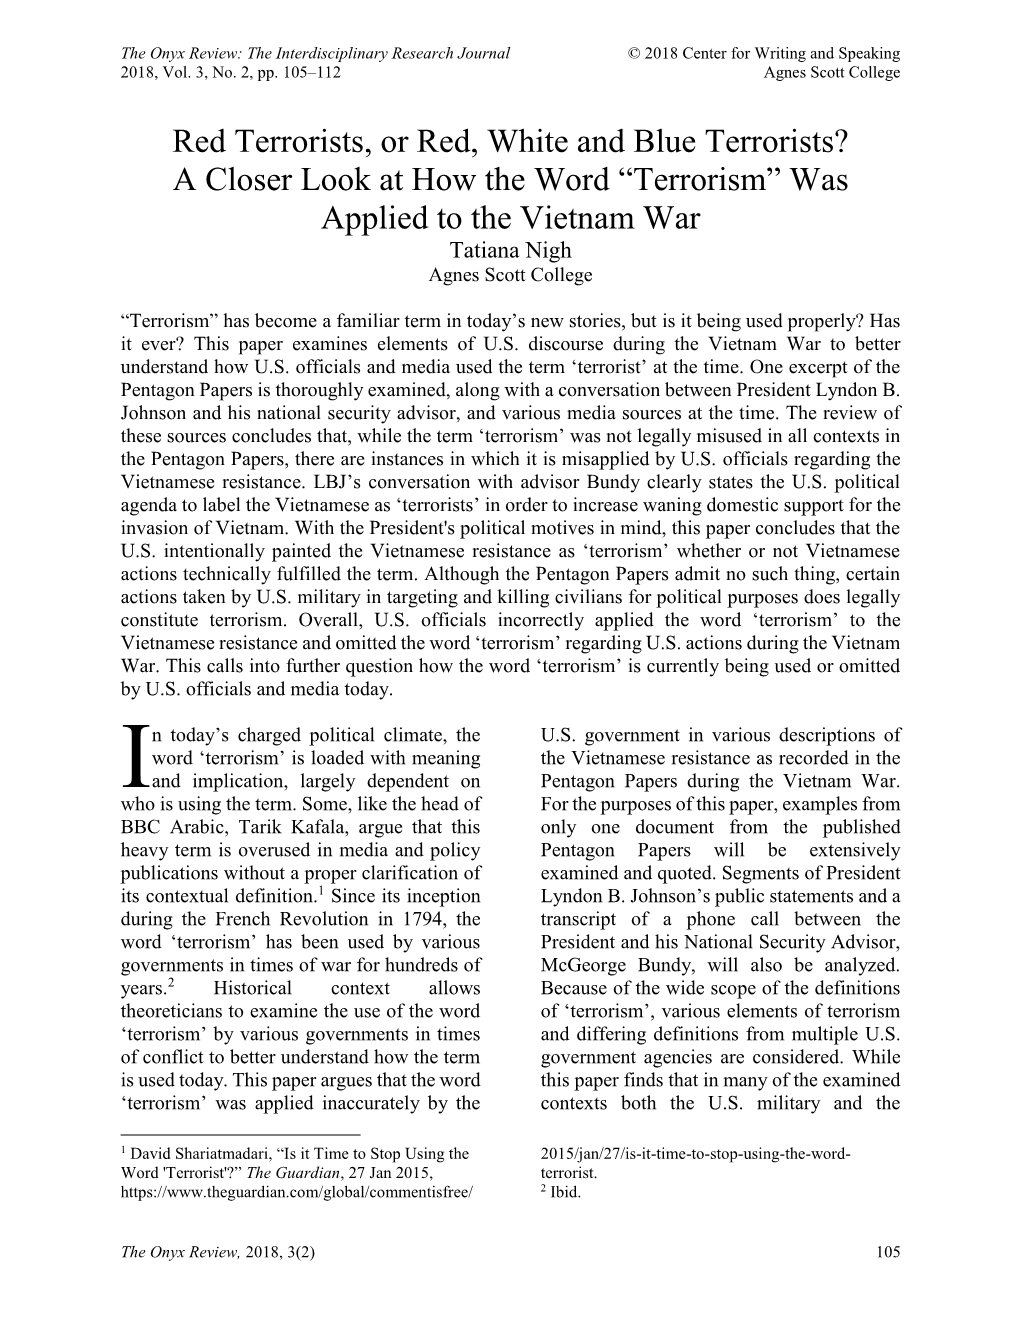 Terrorism” Was Applied to the Vietnam War Tatiana Nigh Agnes Scott College